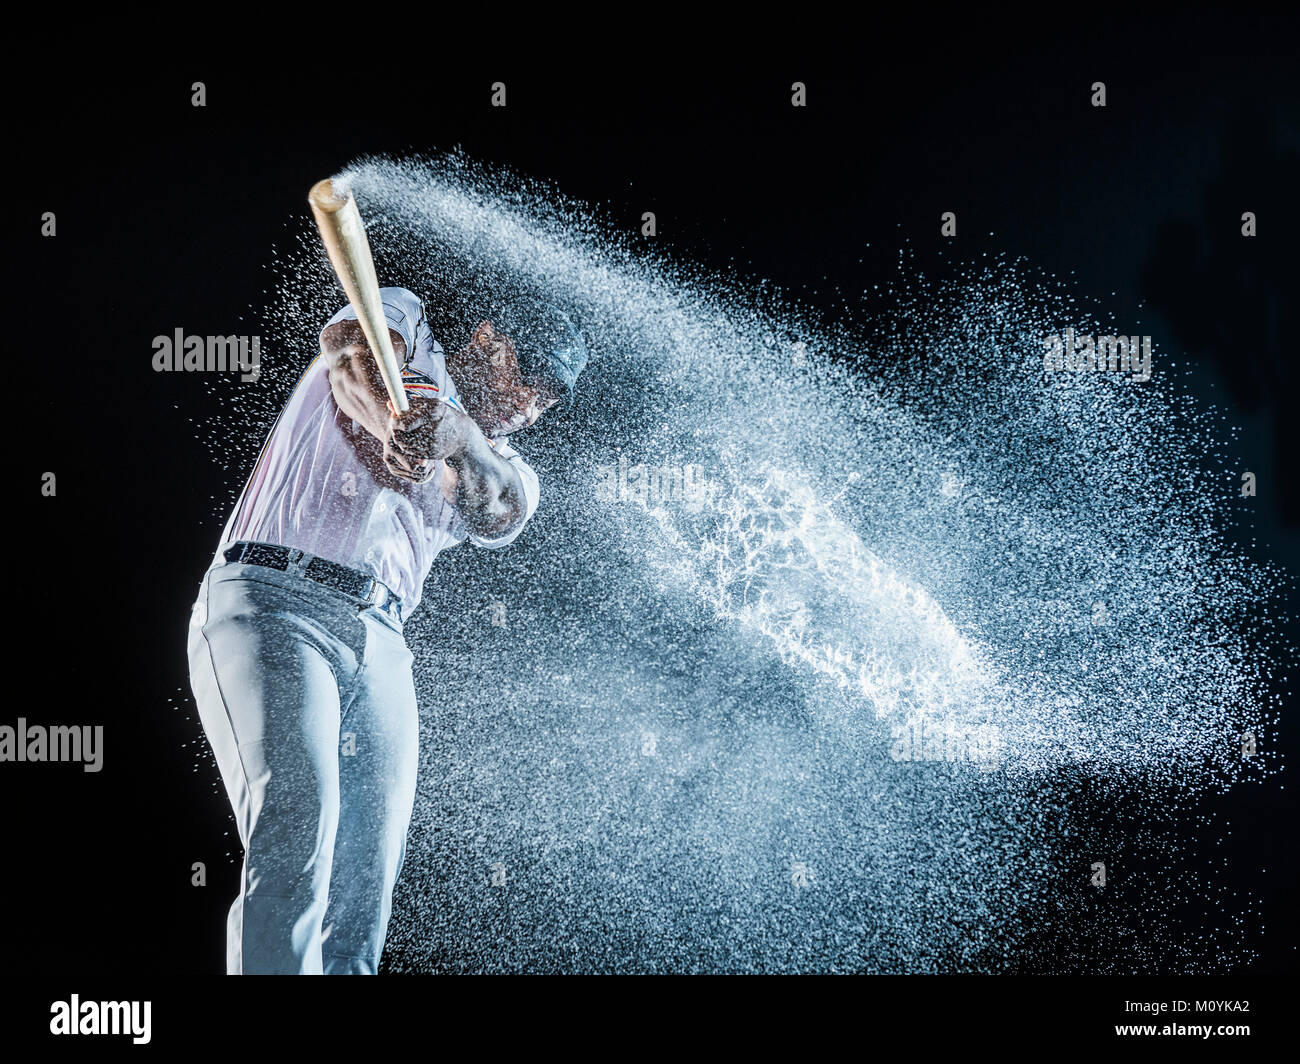 Water splashing from swinging bat of black baseball player Stock Photo